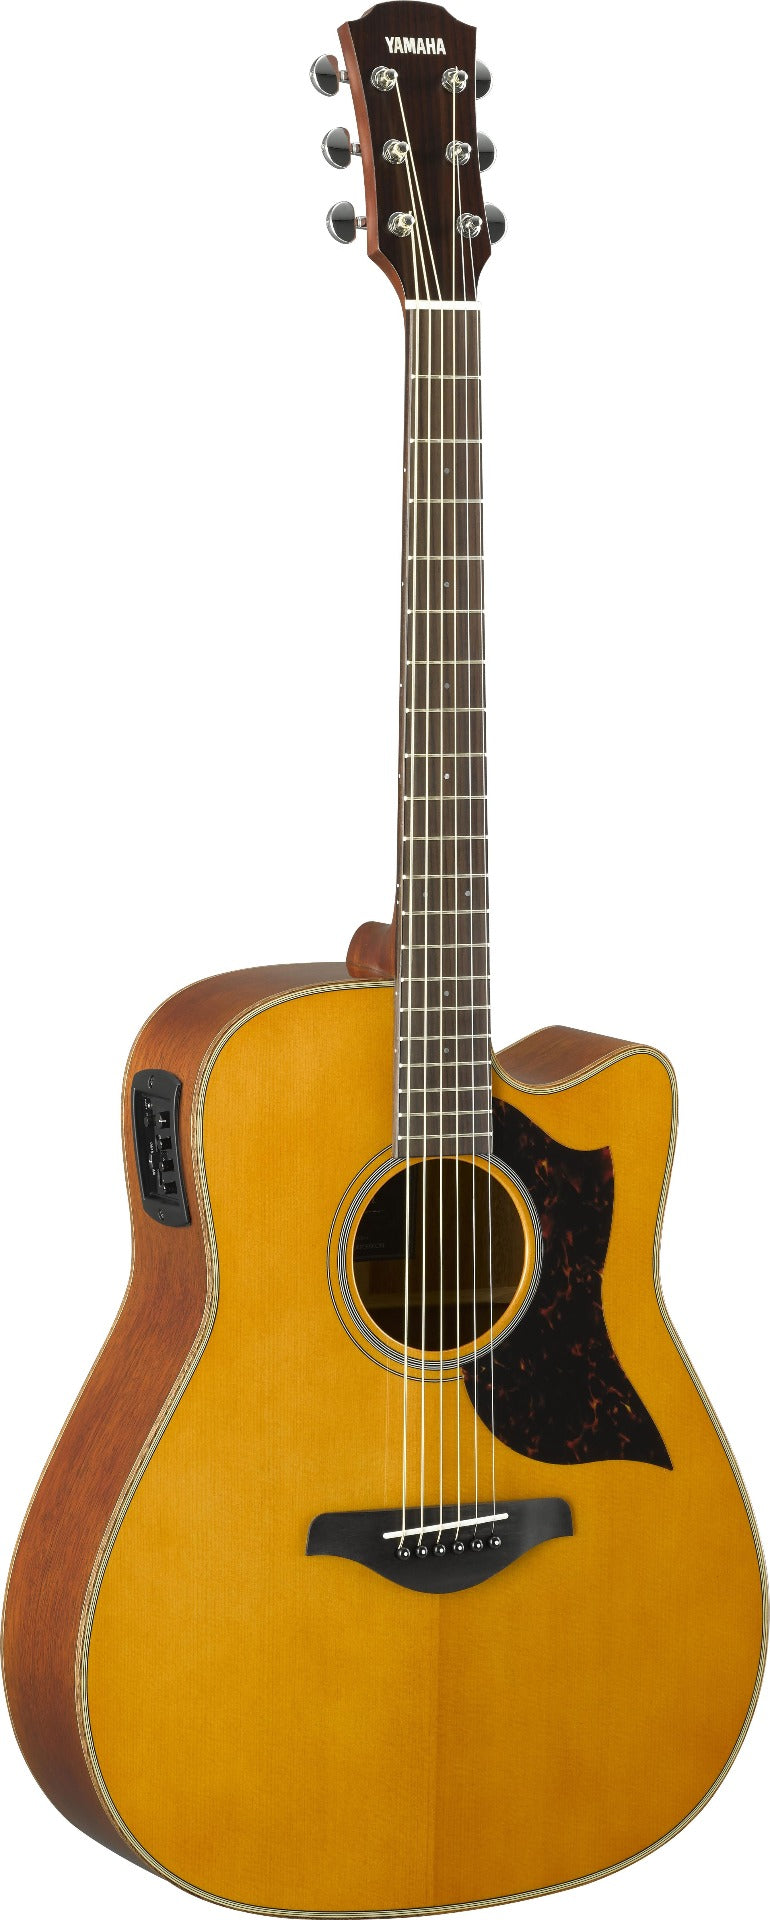 Yamaha A1MVN Folk Cutaway Acoustic Electric Guitar in Vintage Natural